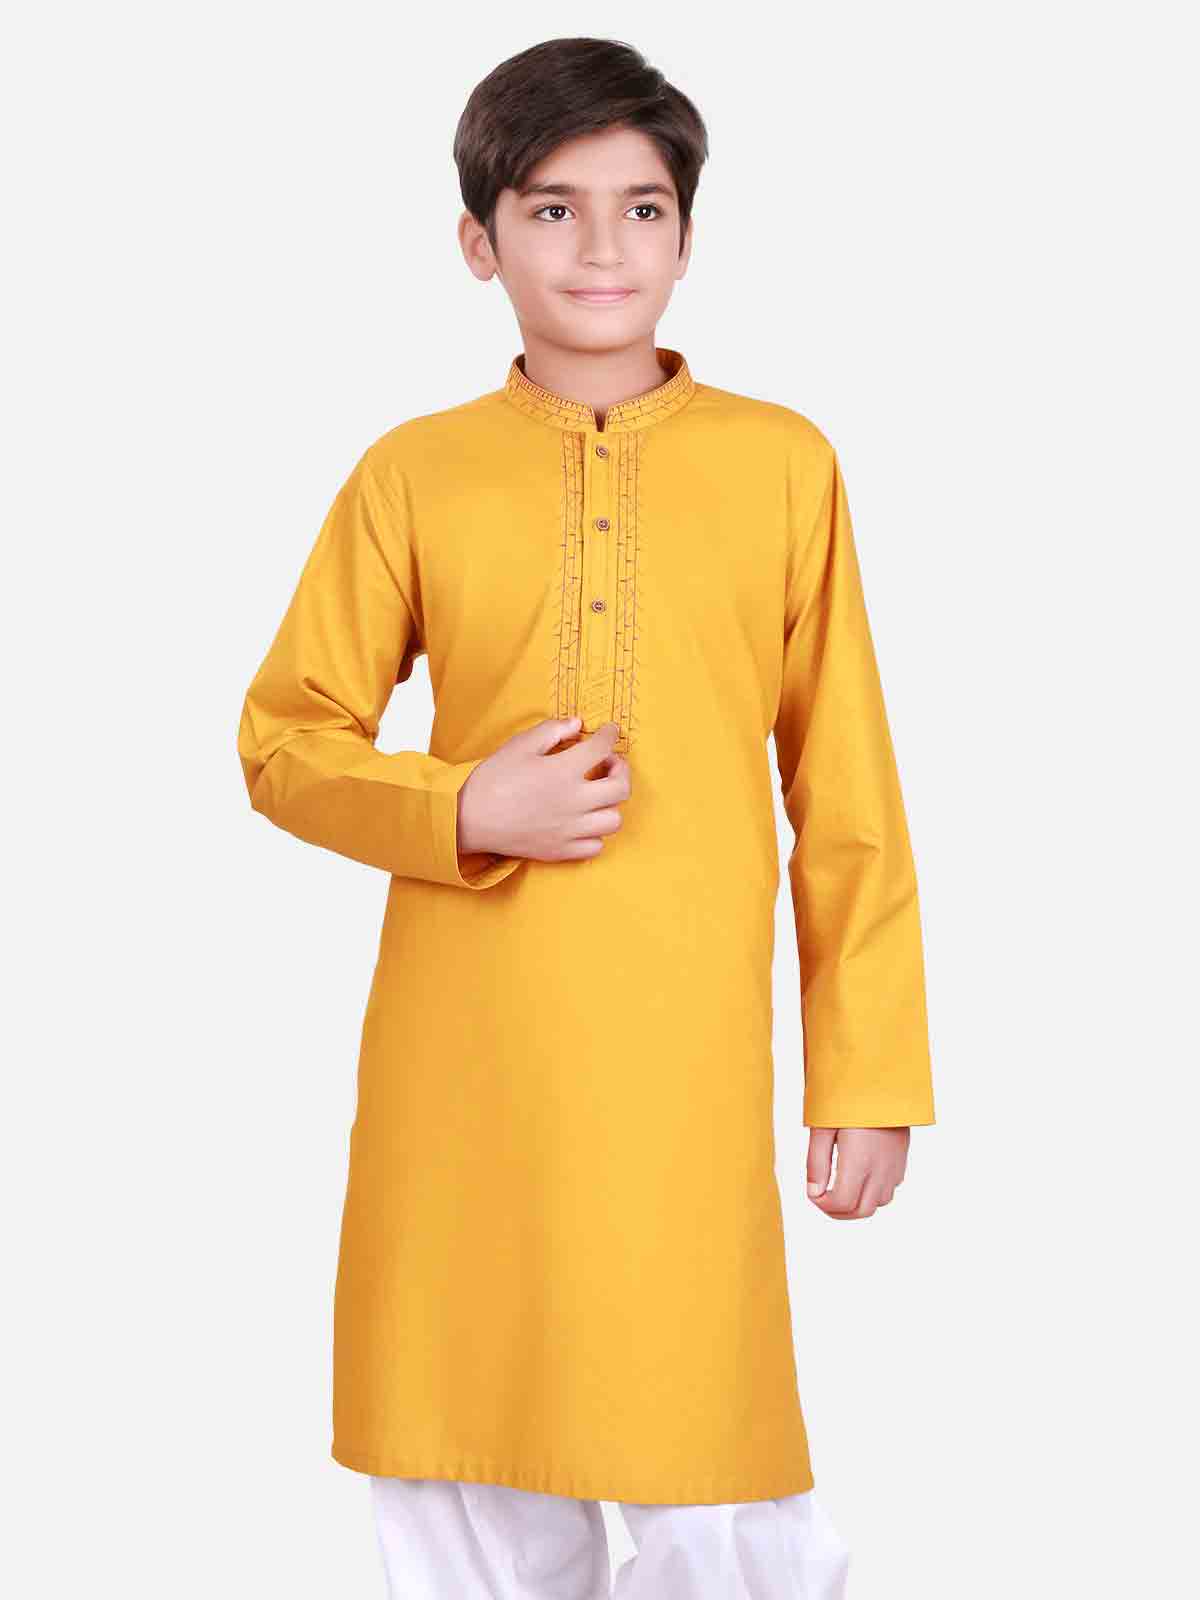 Sharp yellow kurta with white pajama latest eid dresses for little boys in Pakistan 2017